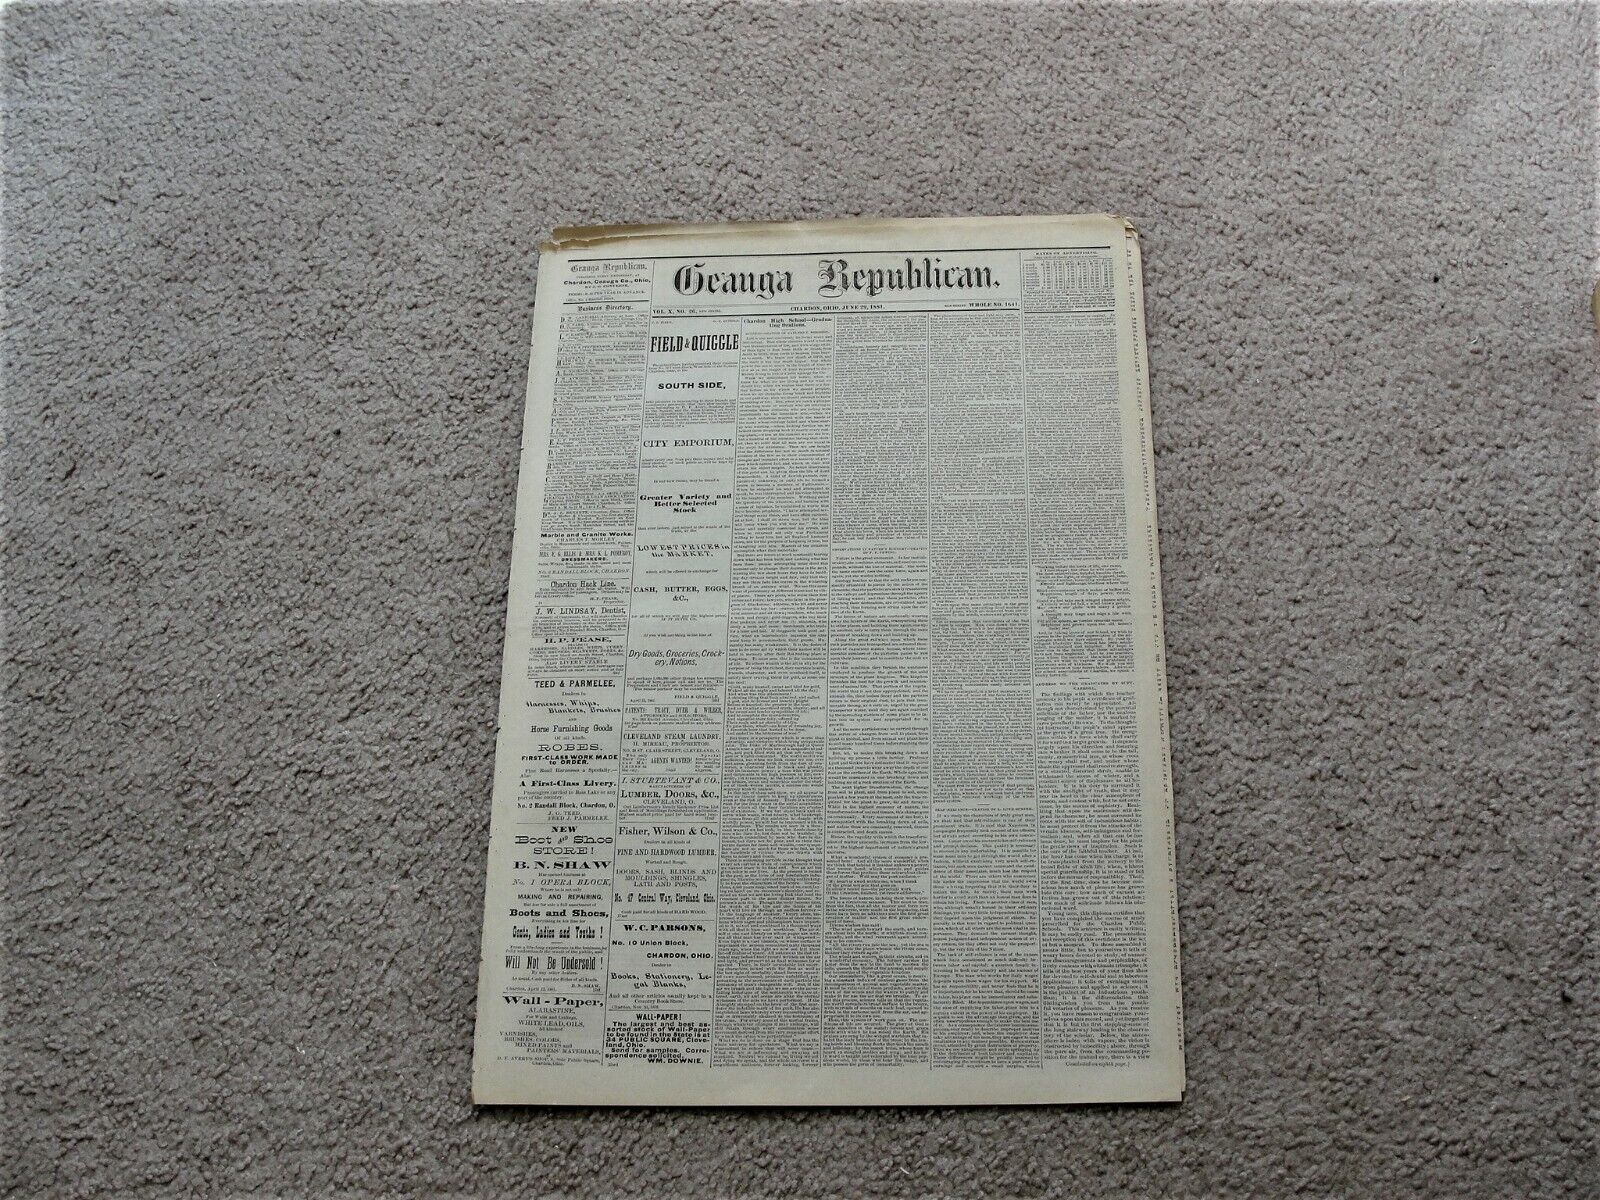 Geauga Republican, Wednesday, June 29, 1881- Chardon, Ohio Newspaper. 